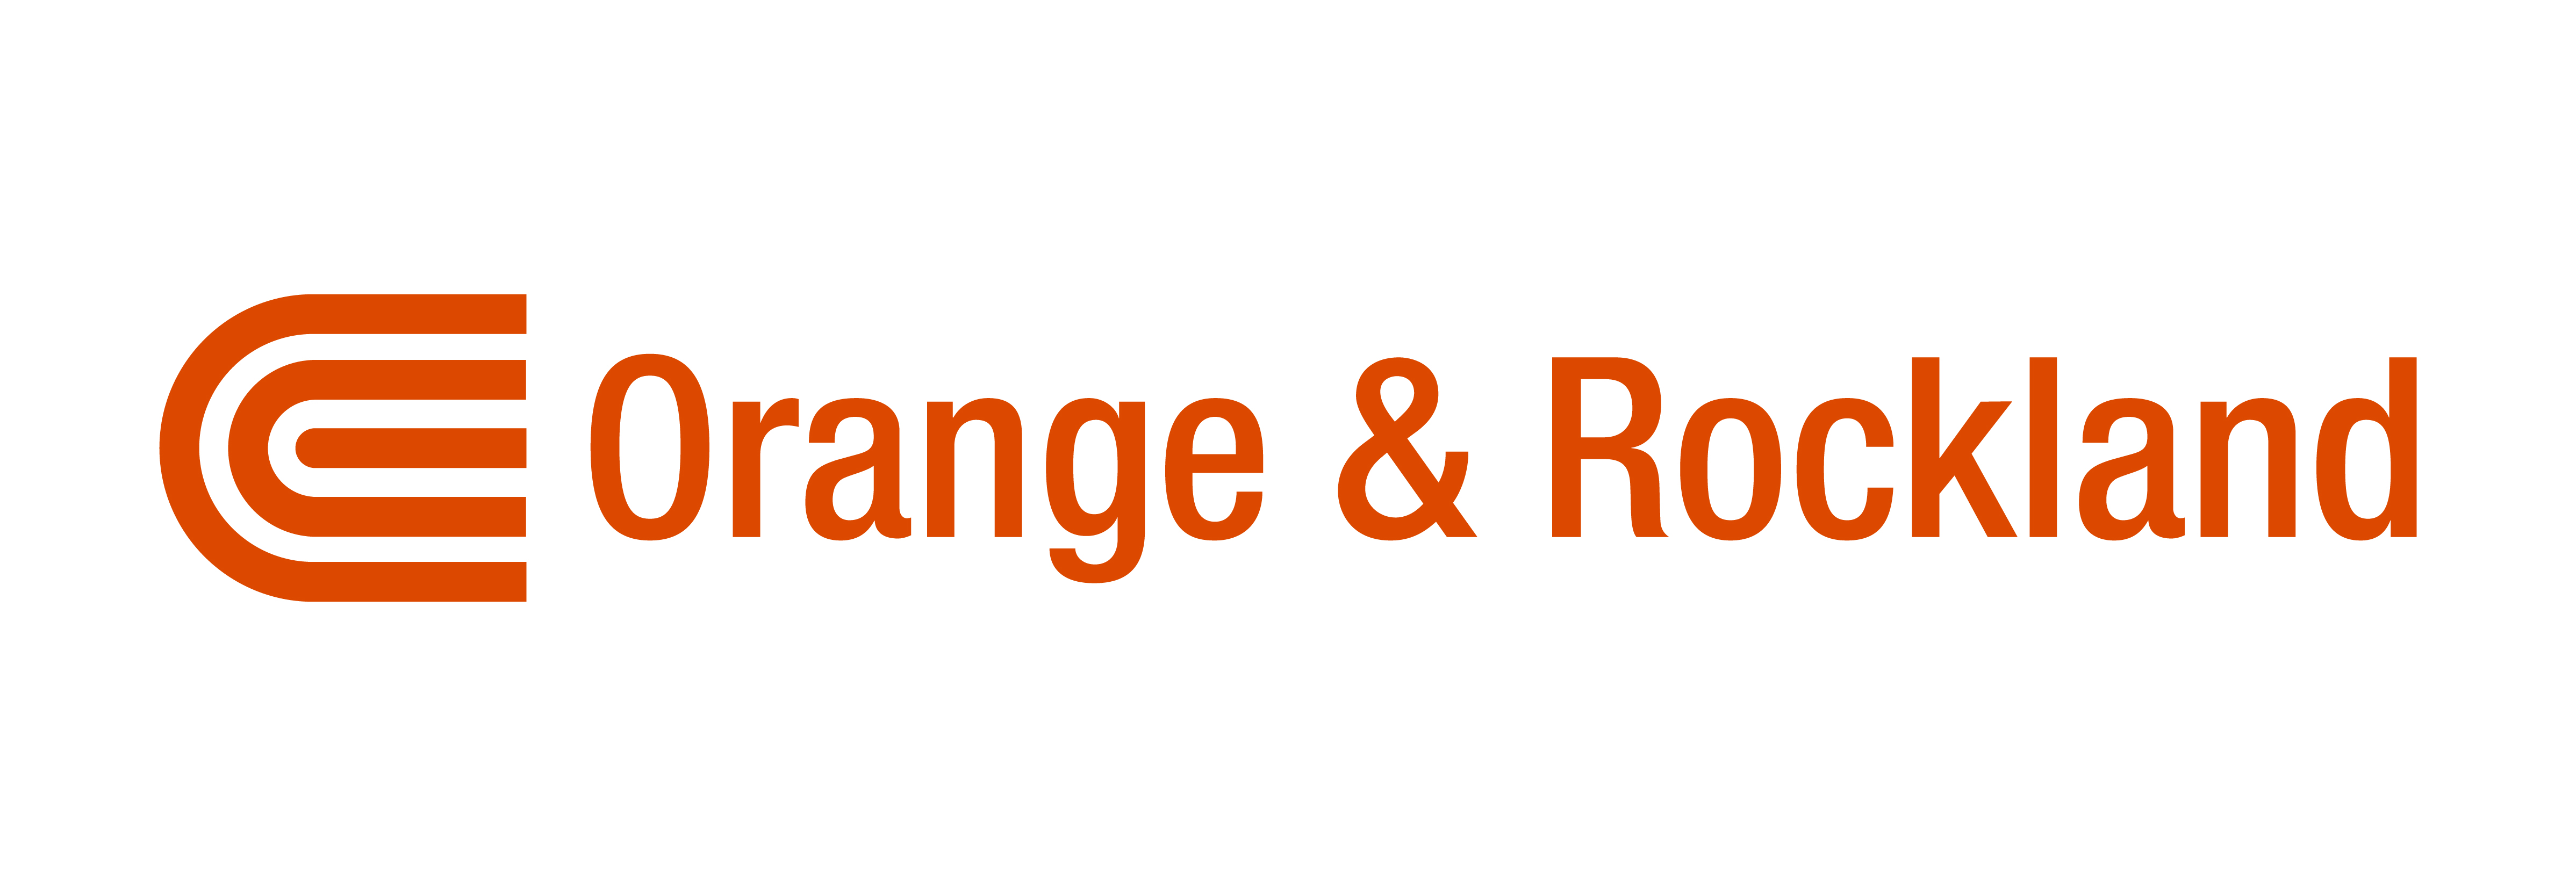 orange-rockland-instant-rebate-icf-energy-instantrebate-web